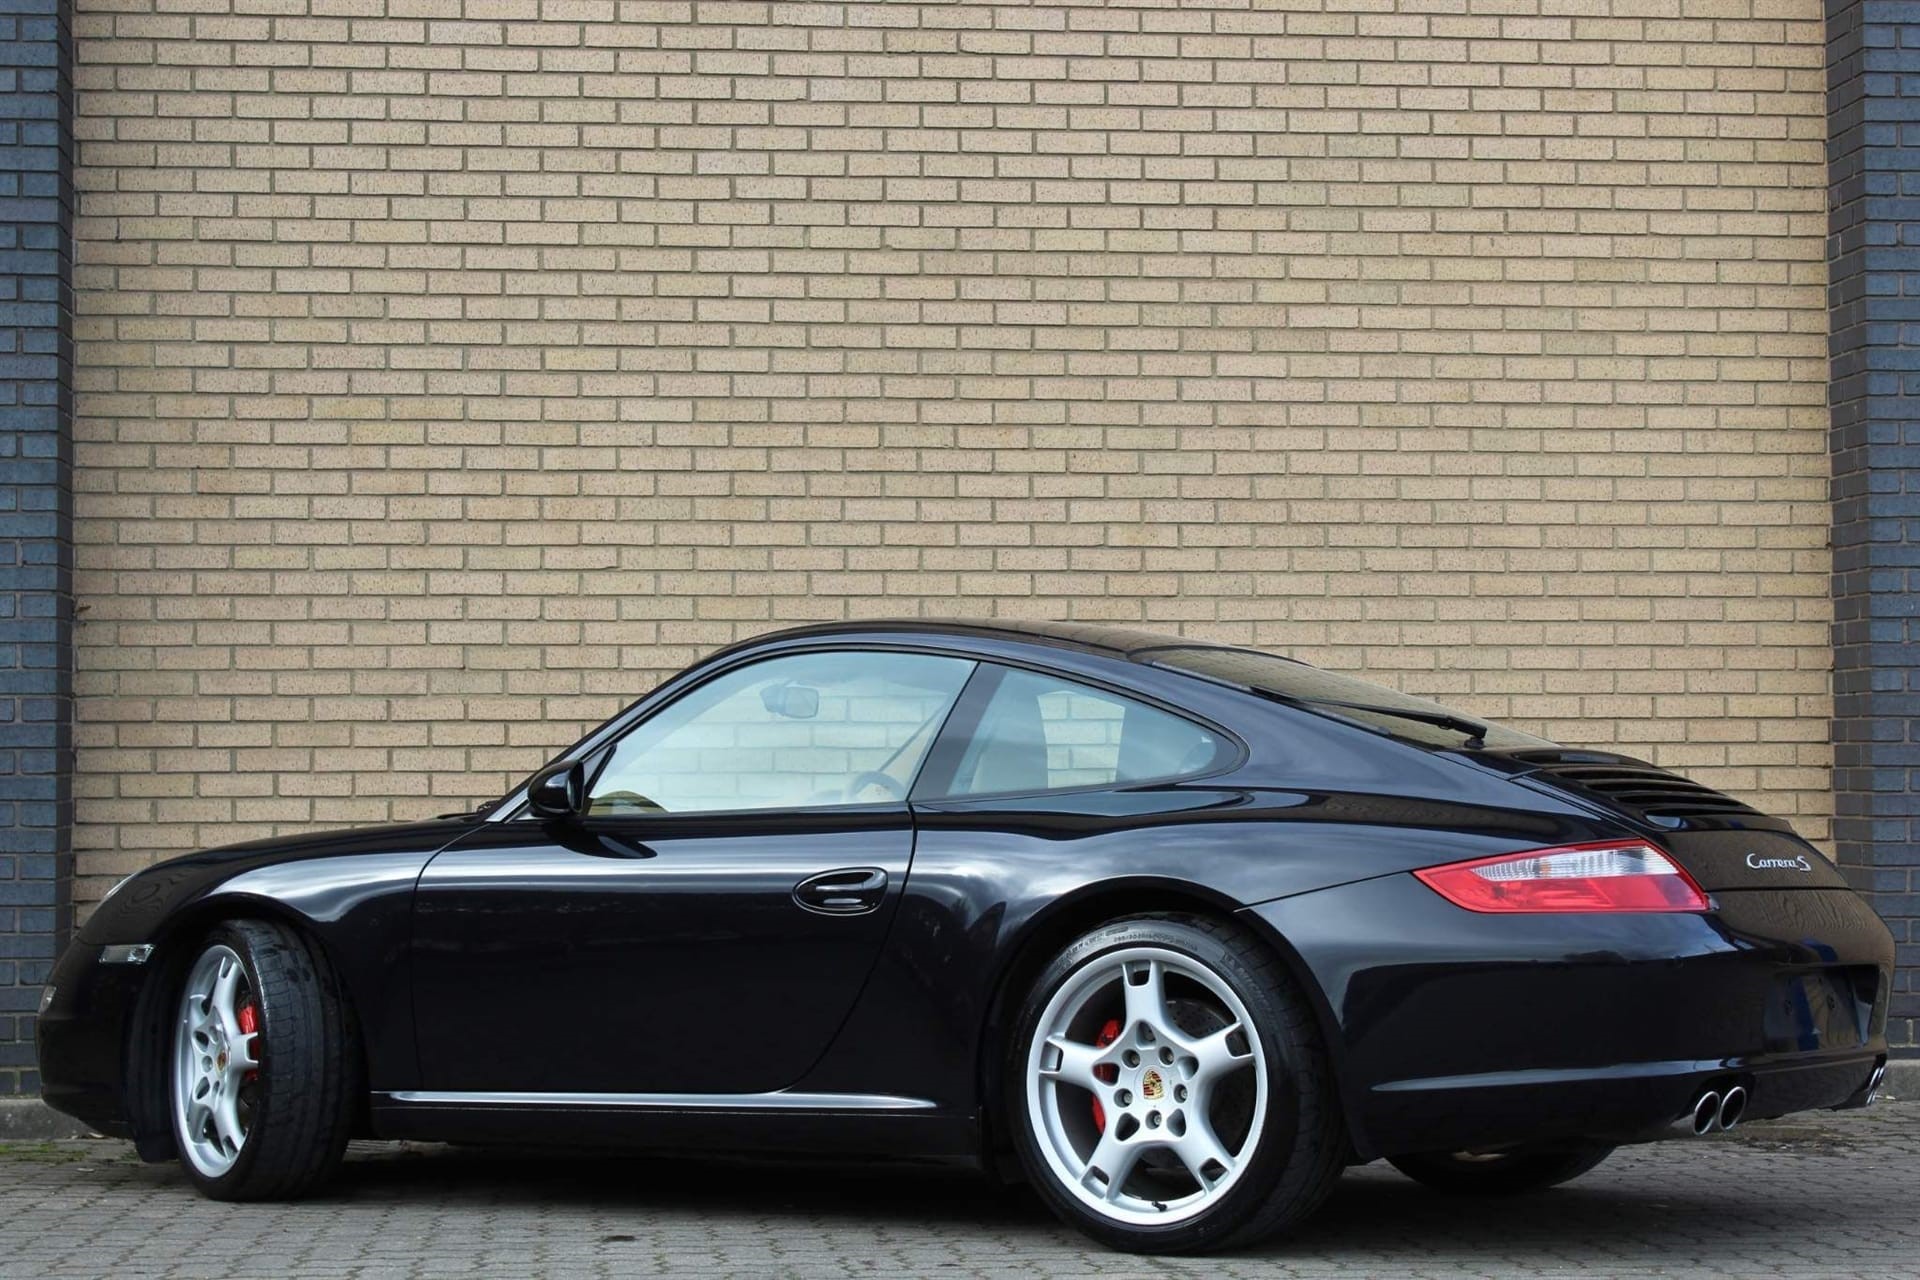 Used Porsche 911 for sale in Banbury, Oxfordshire | Banbury Motors Ltd